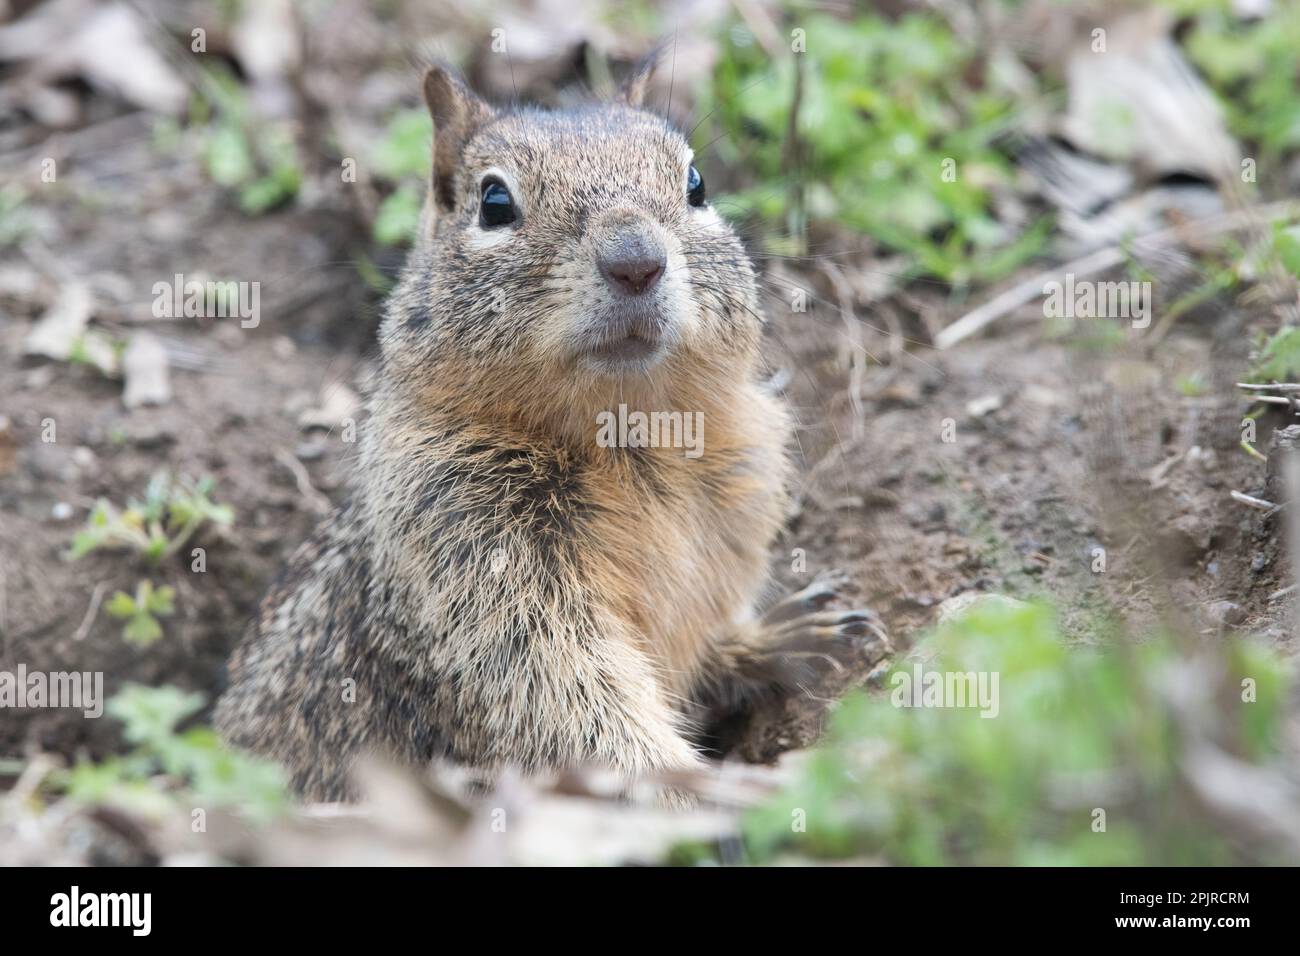 California ground squirrel (Otospermophilus beecheyi) from Blue oak ranch reserve in Santa Clara county, California. Stock Photo